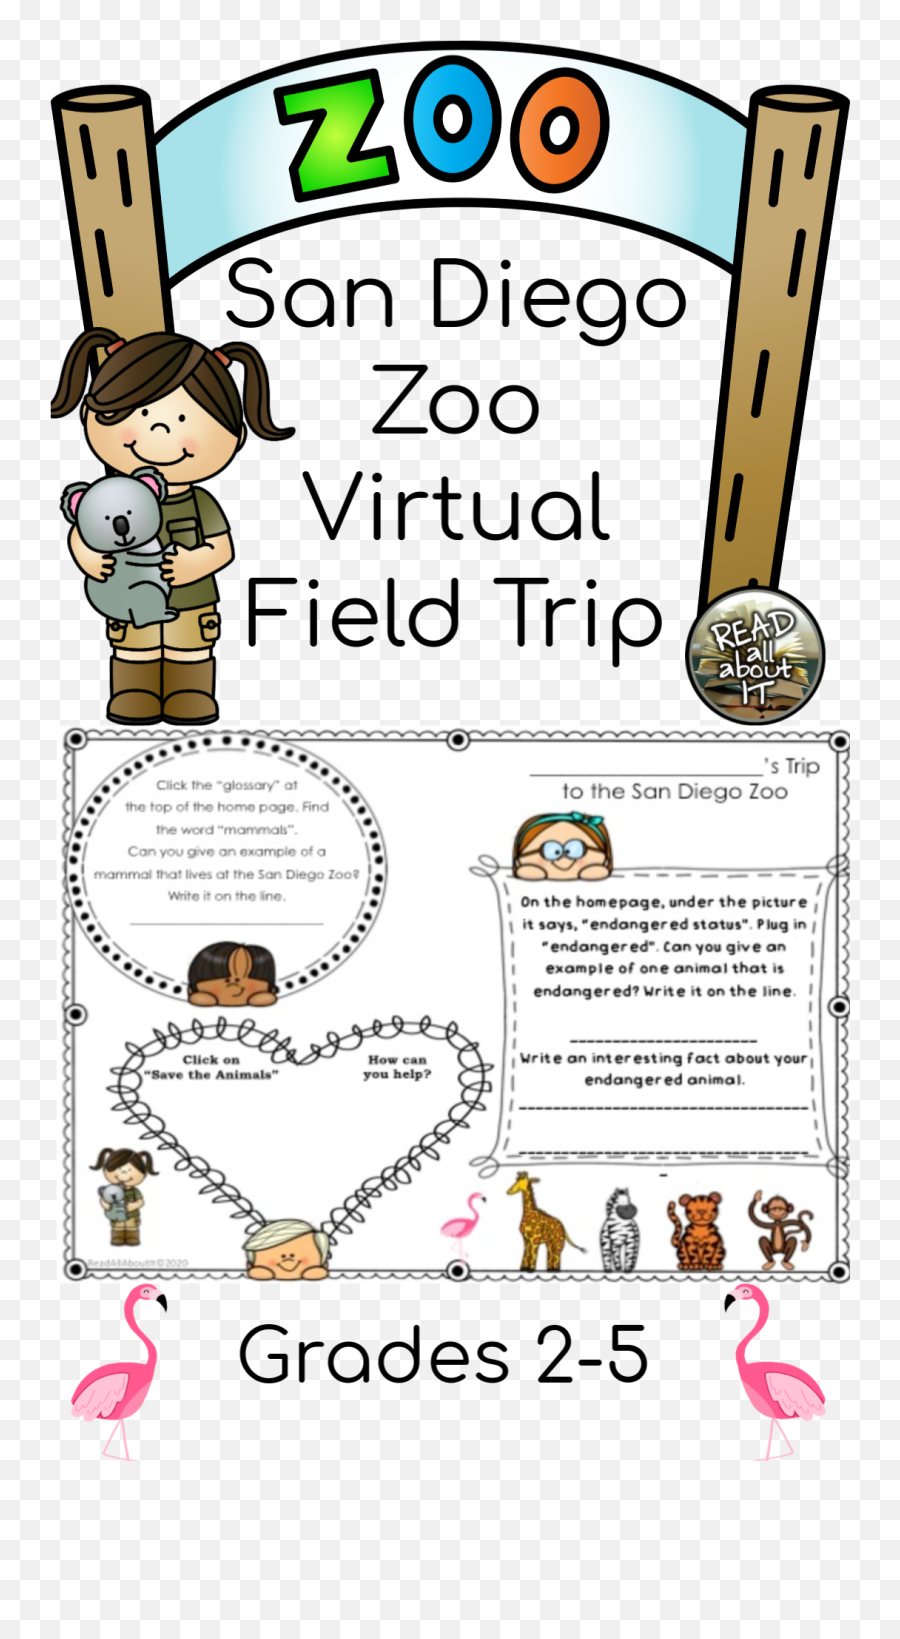 San Diego Zoo - San Diego Virtual Zoo Trip Invitation Emoji,San Diego Zoo Logo